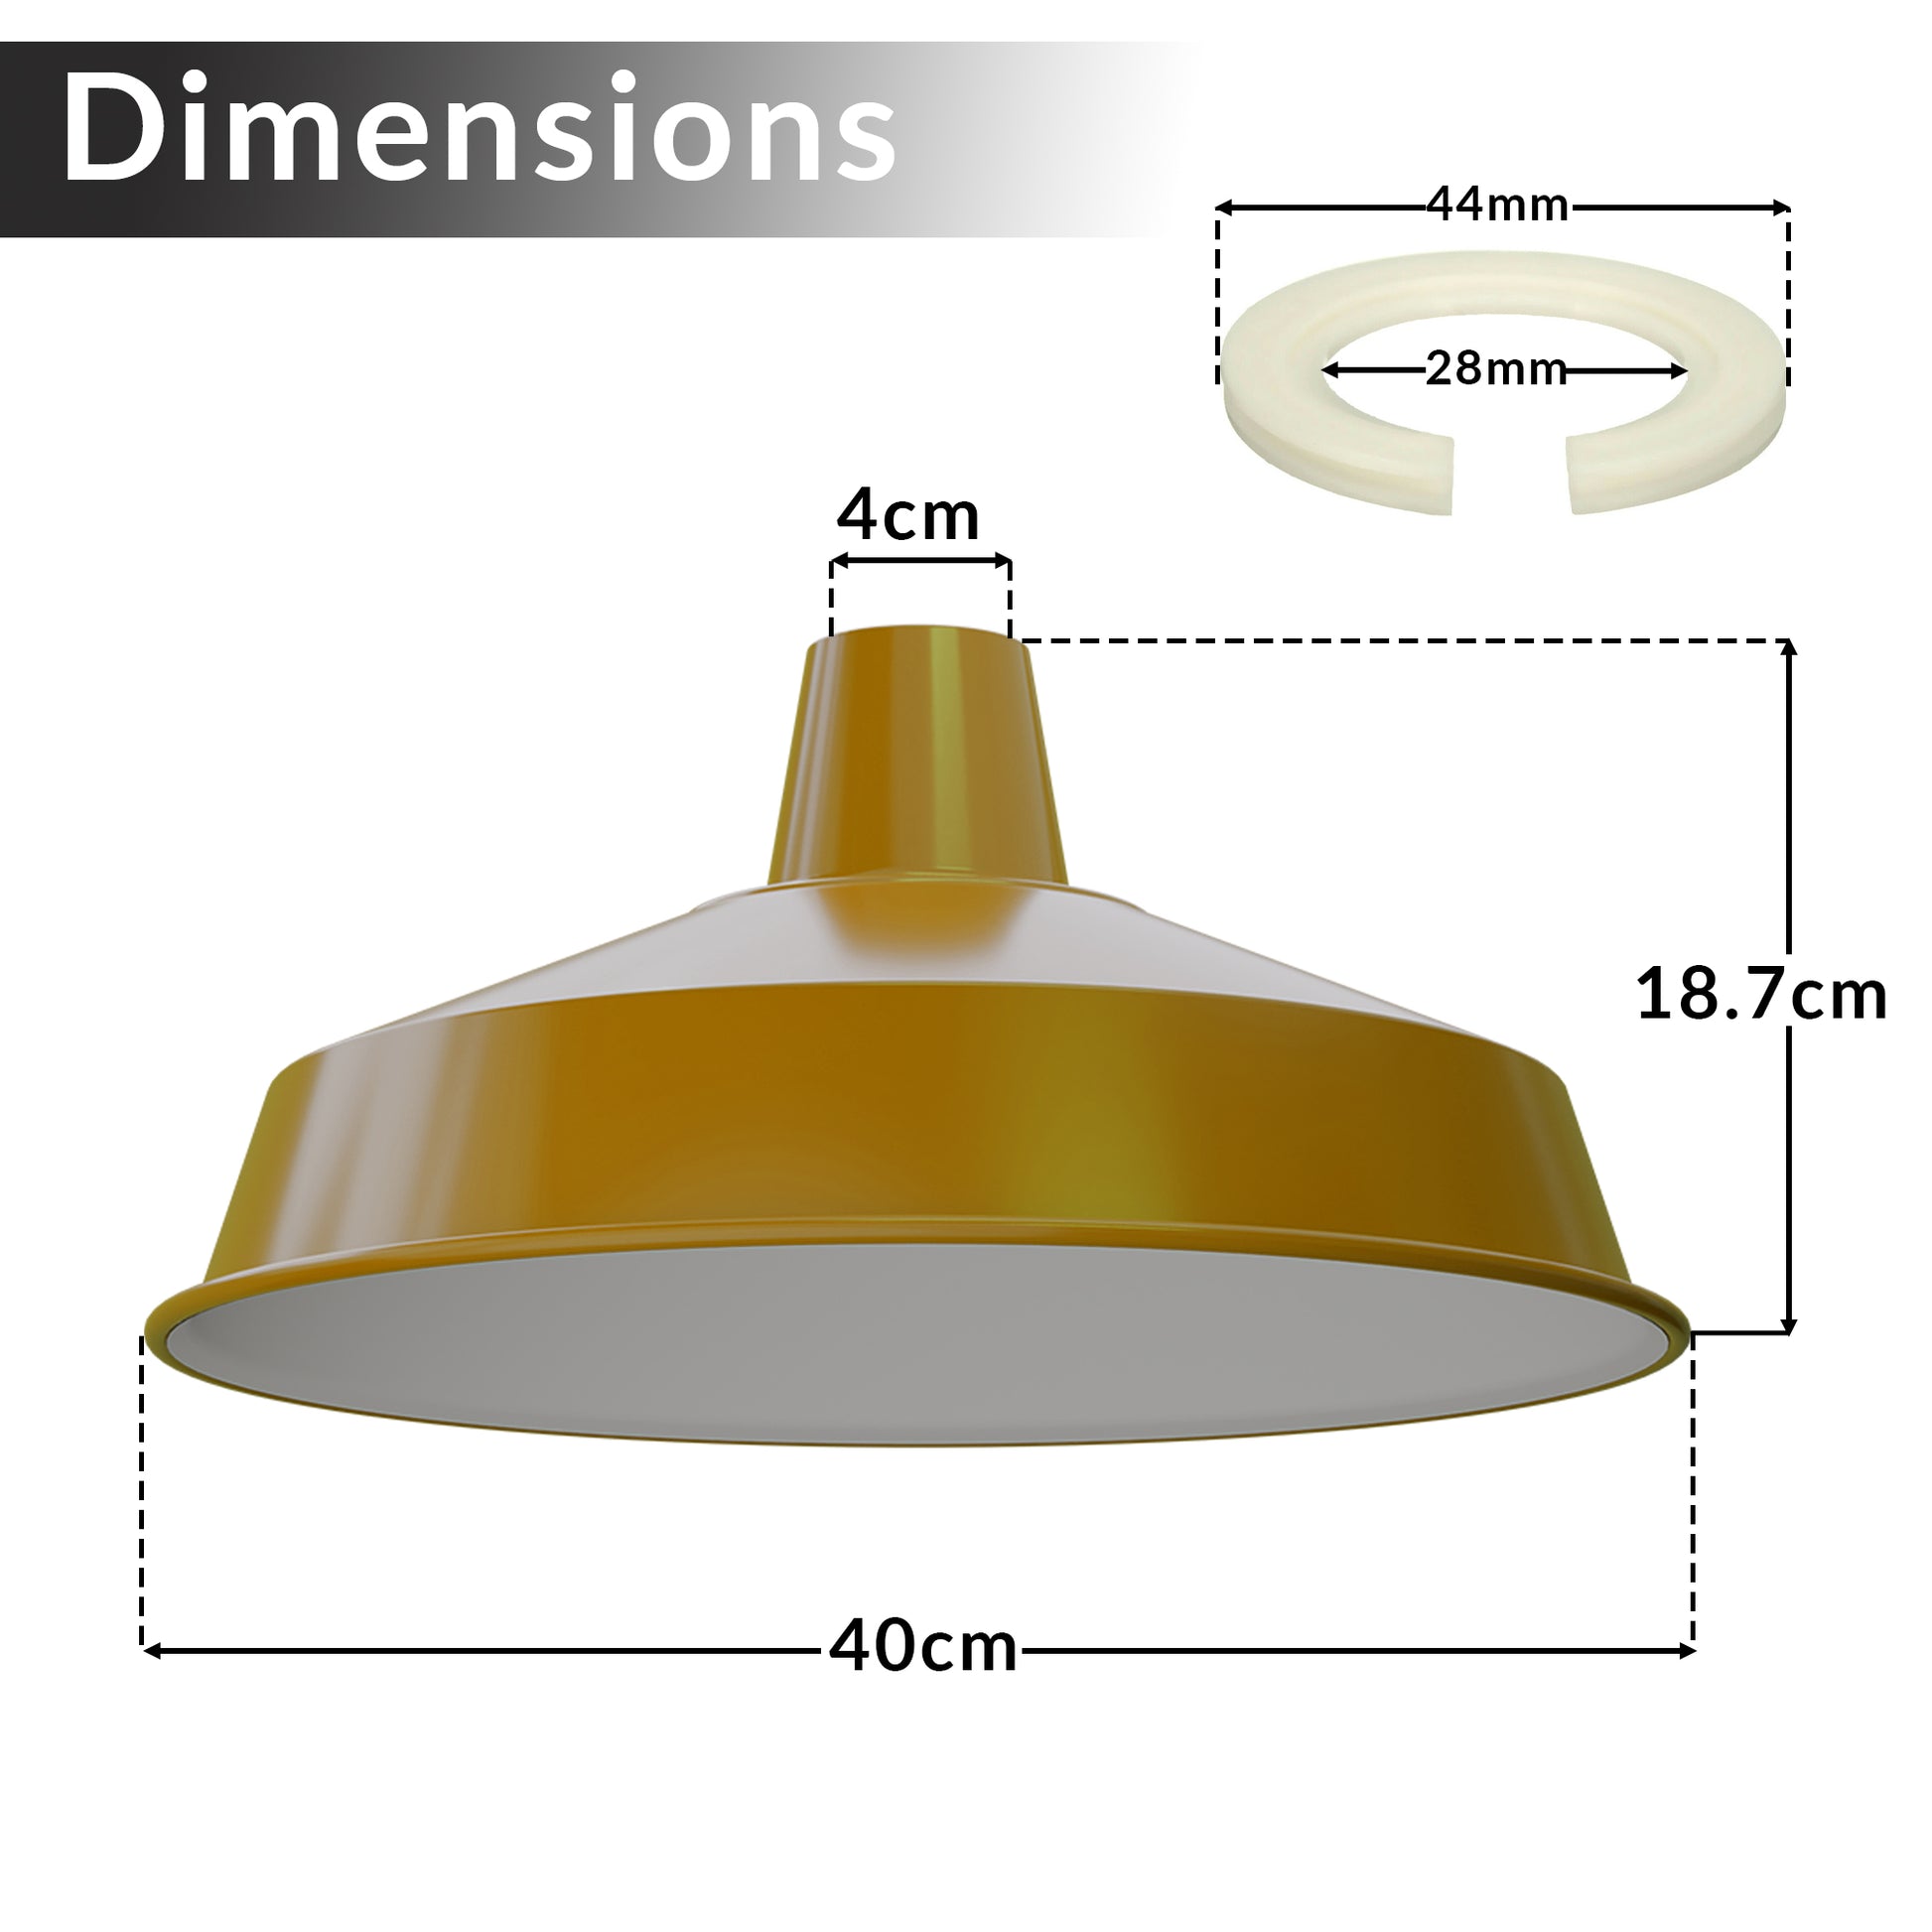 Metal Pluto Ceiling Pendant Light Fitting Lamp Shade